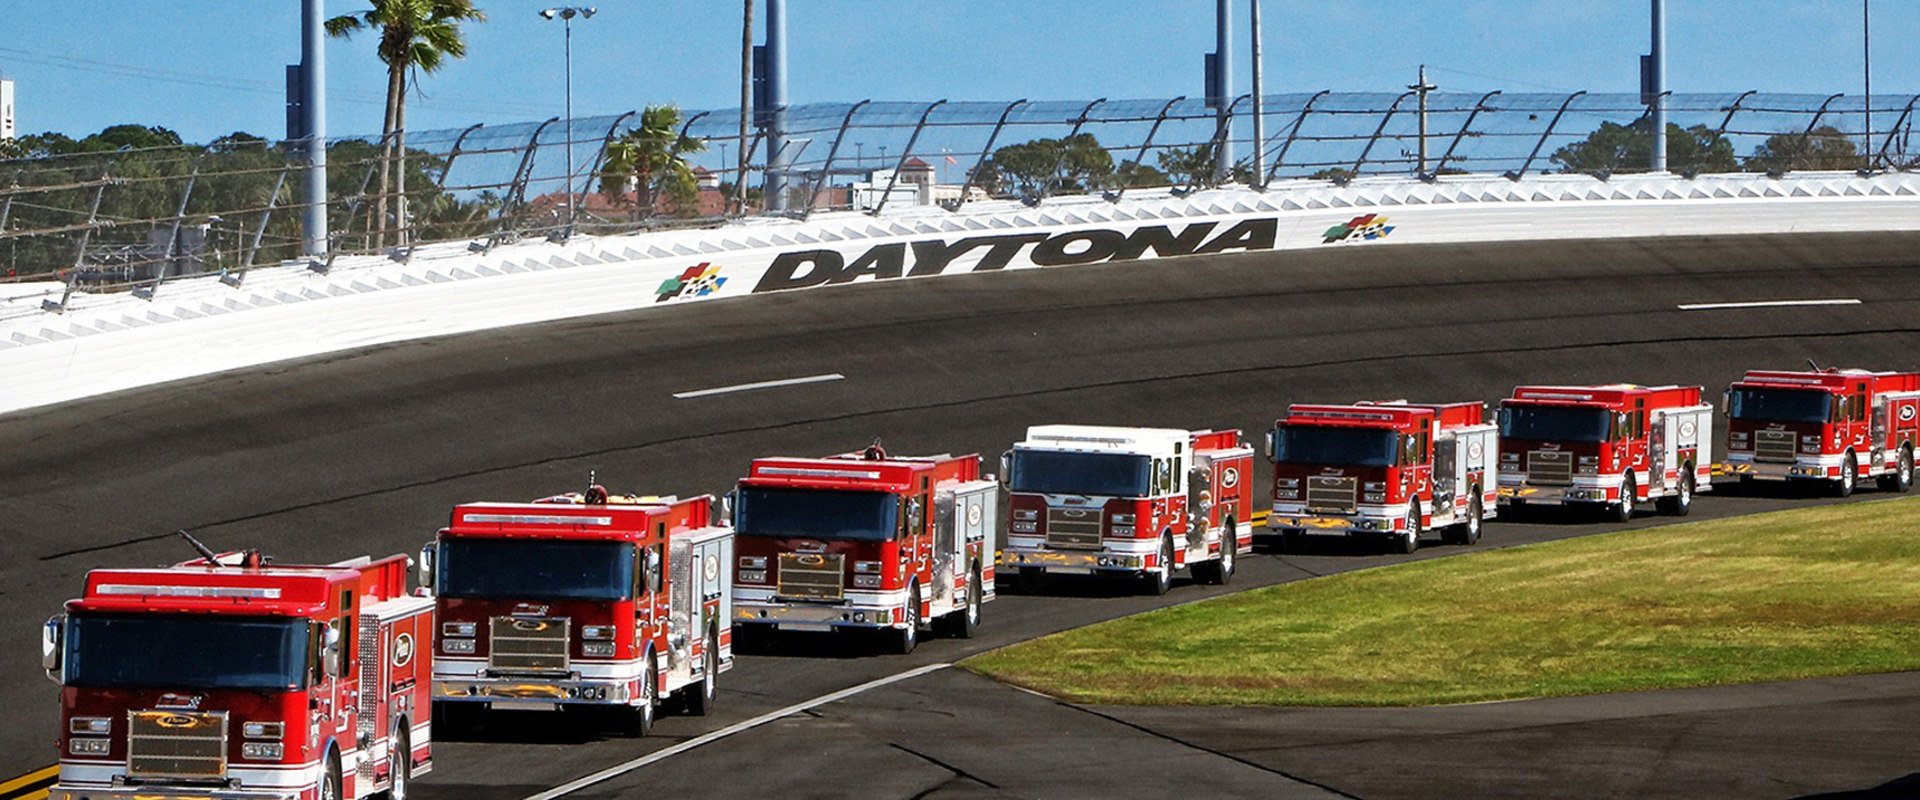 Safety Regulations at Daytona International Speedway